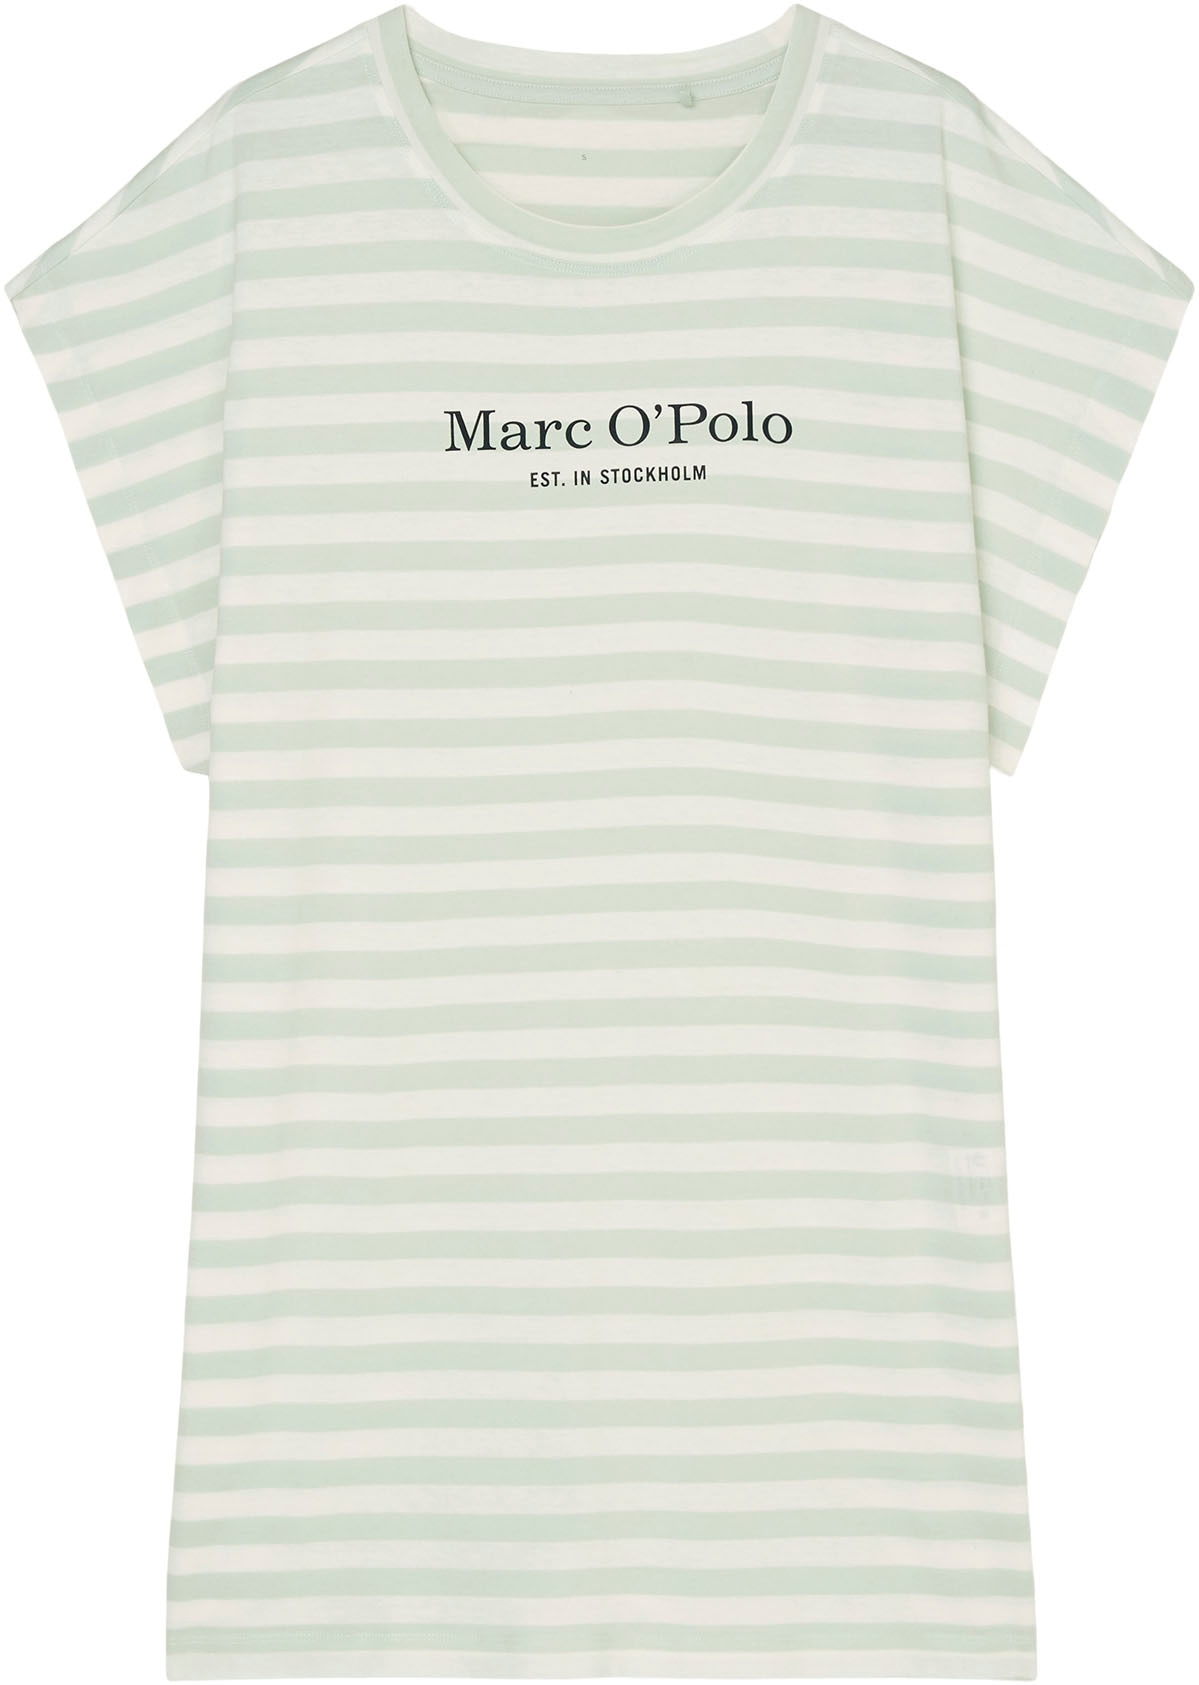 Marc O'Polo Nachthemd, Sleepshirt mit zarten Streifen